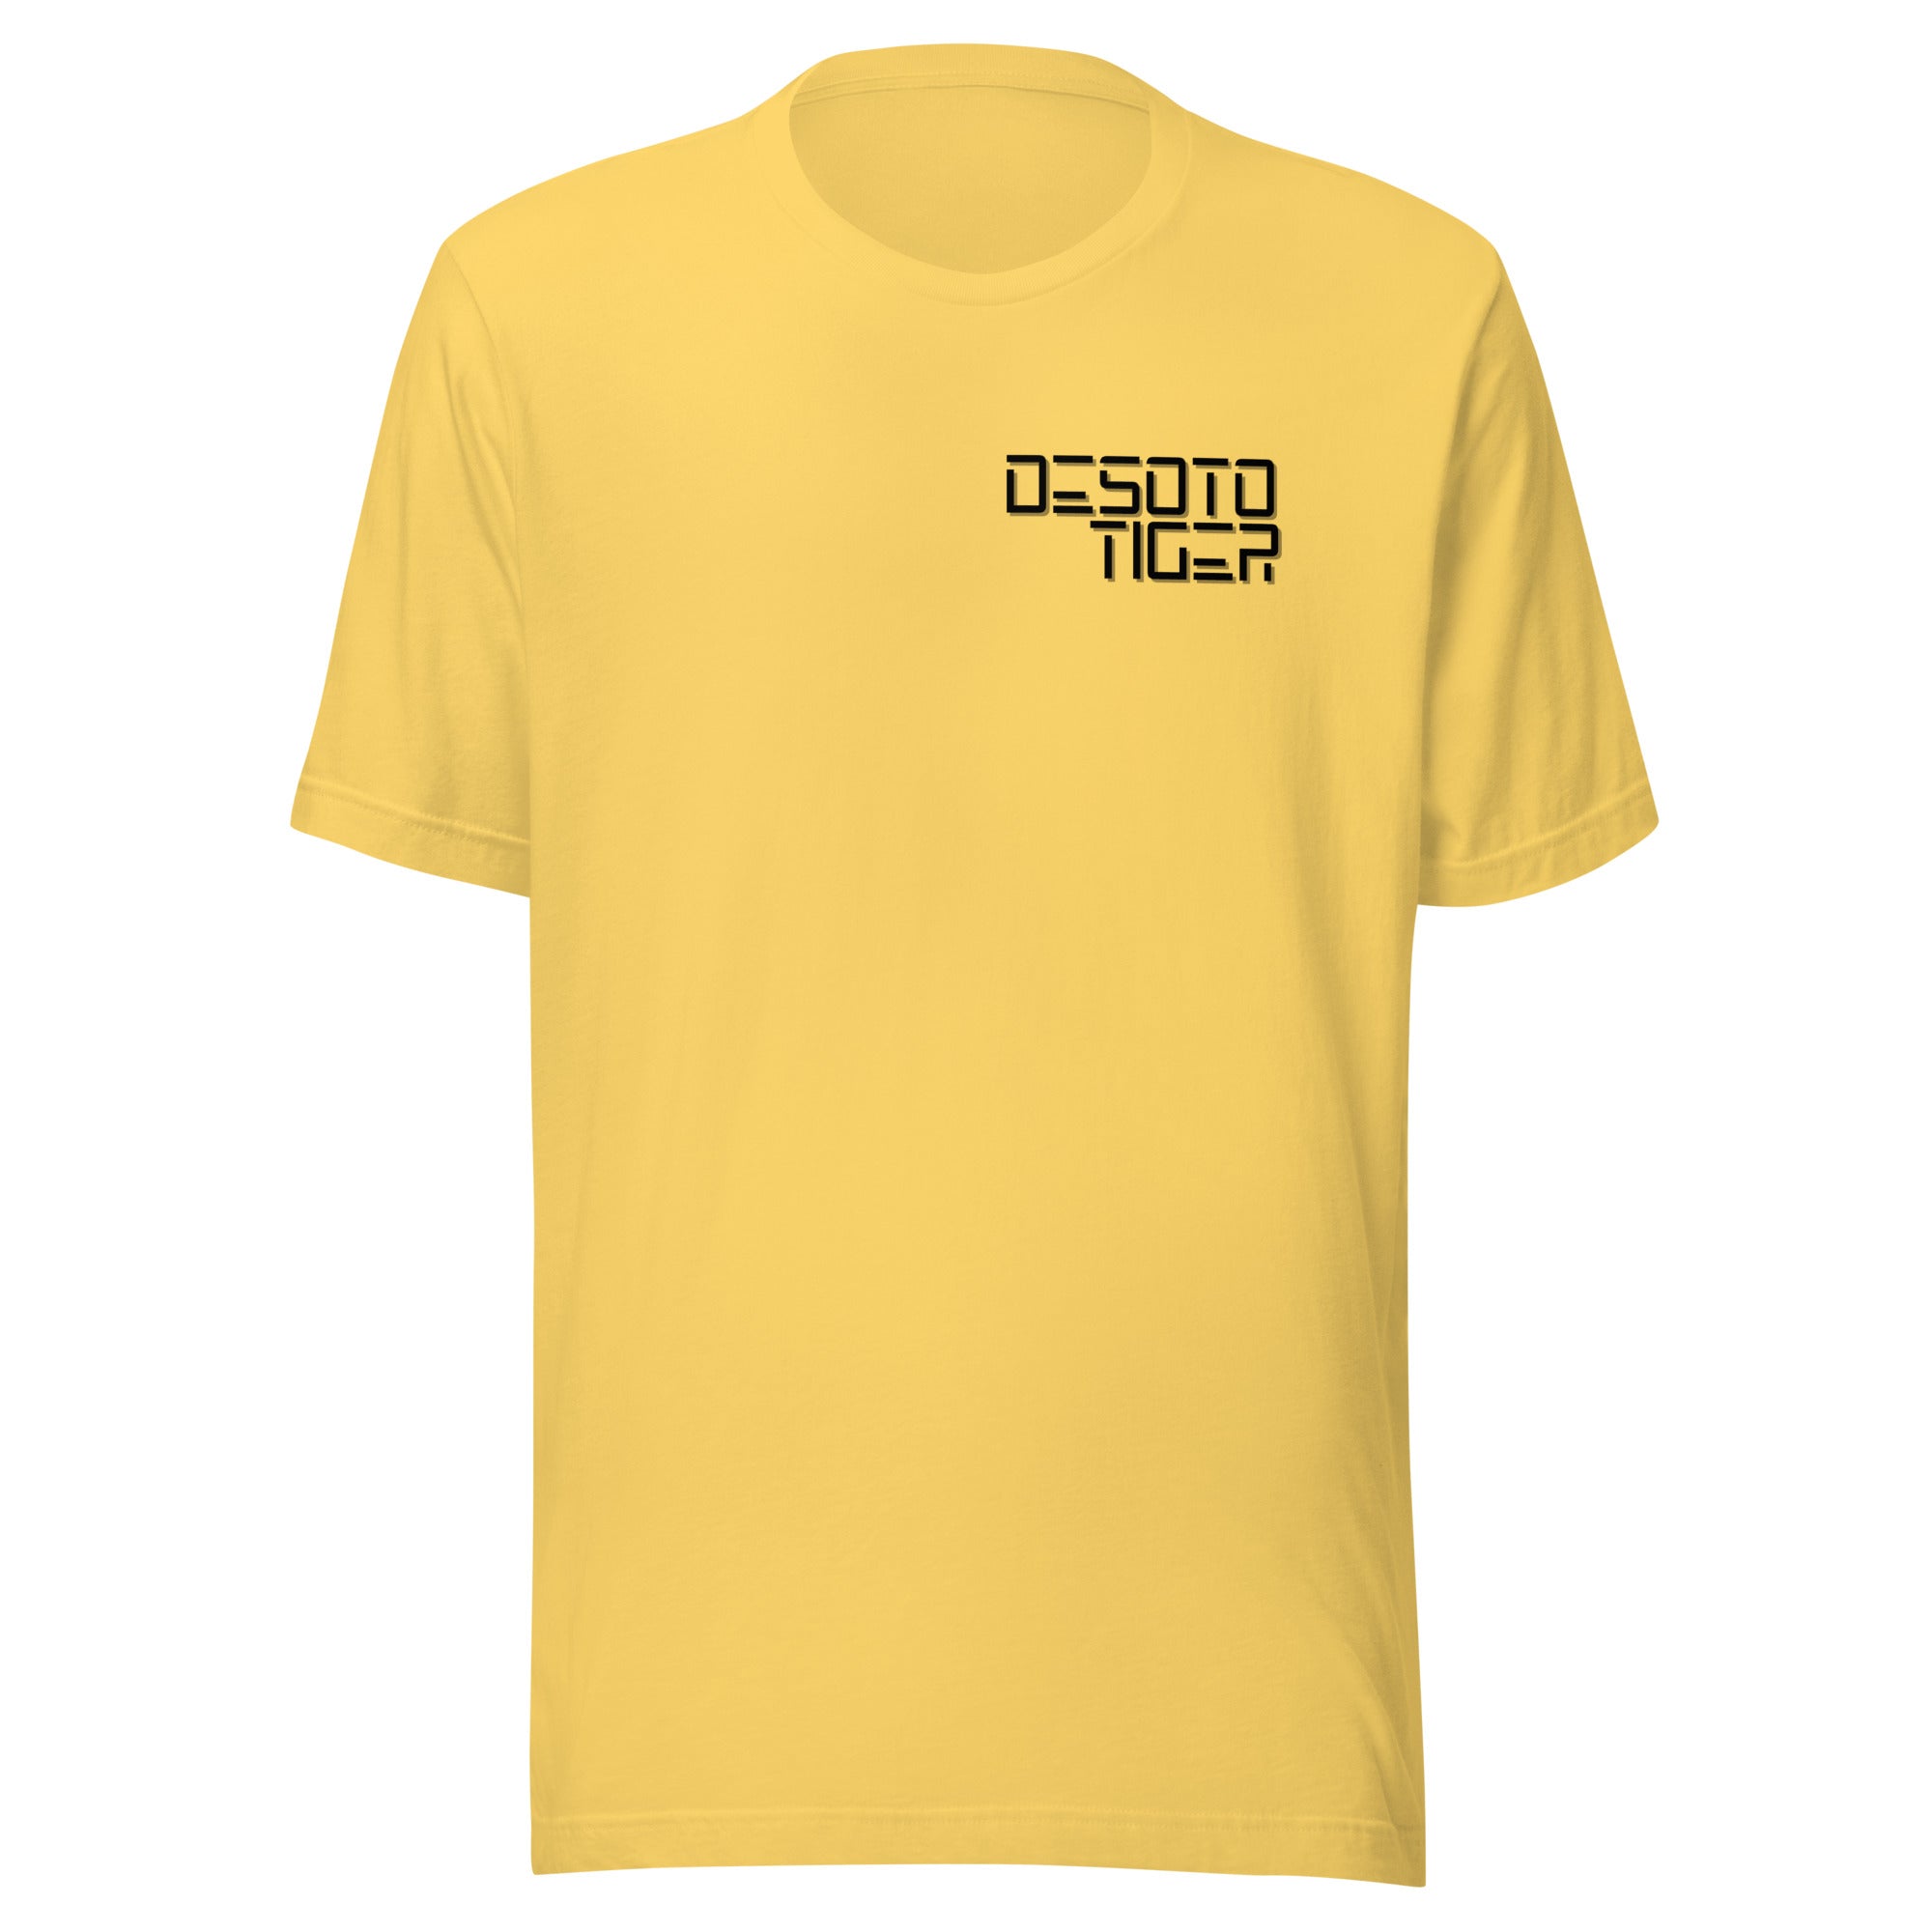 Desoto Tiger - Unisex t-shirt